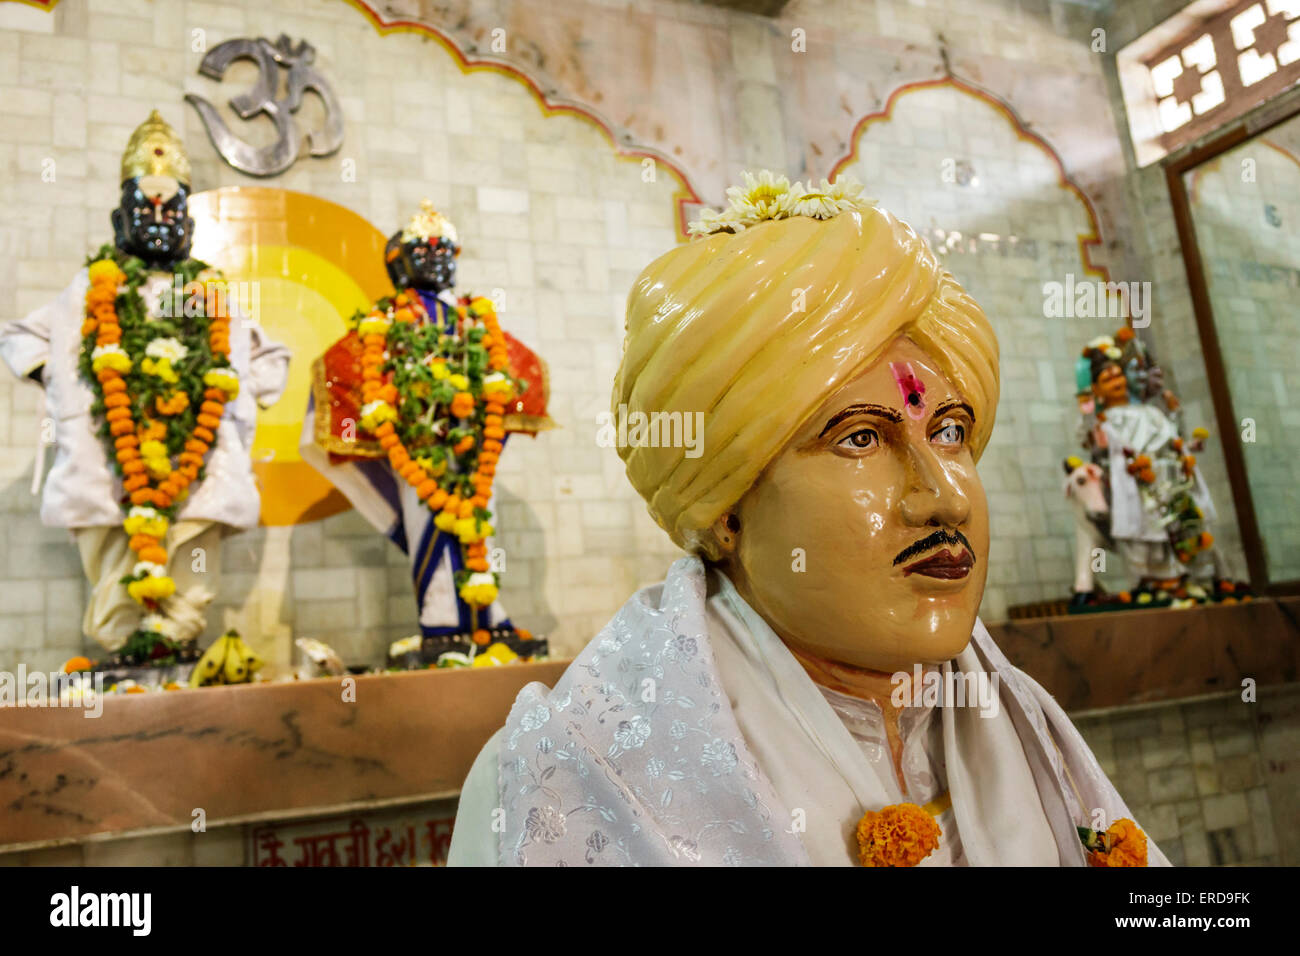 Mumbai India,Lower Parel,Sitaram Jadhav Marg,Road,Jai Hanuman Mandir temple,man men male,statue,Hindu,bindi,bindi,India150301080 Stock Photo